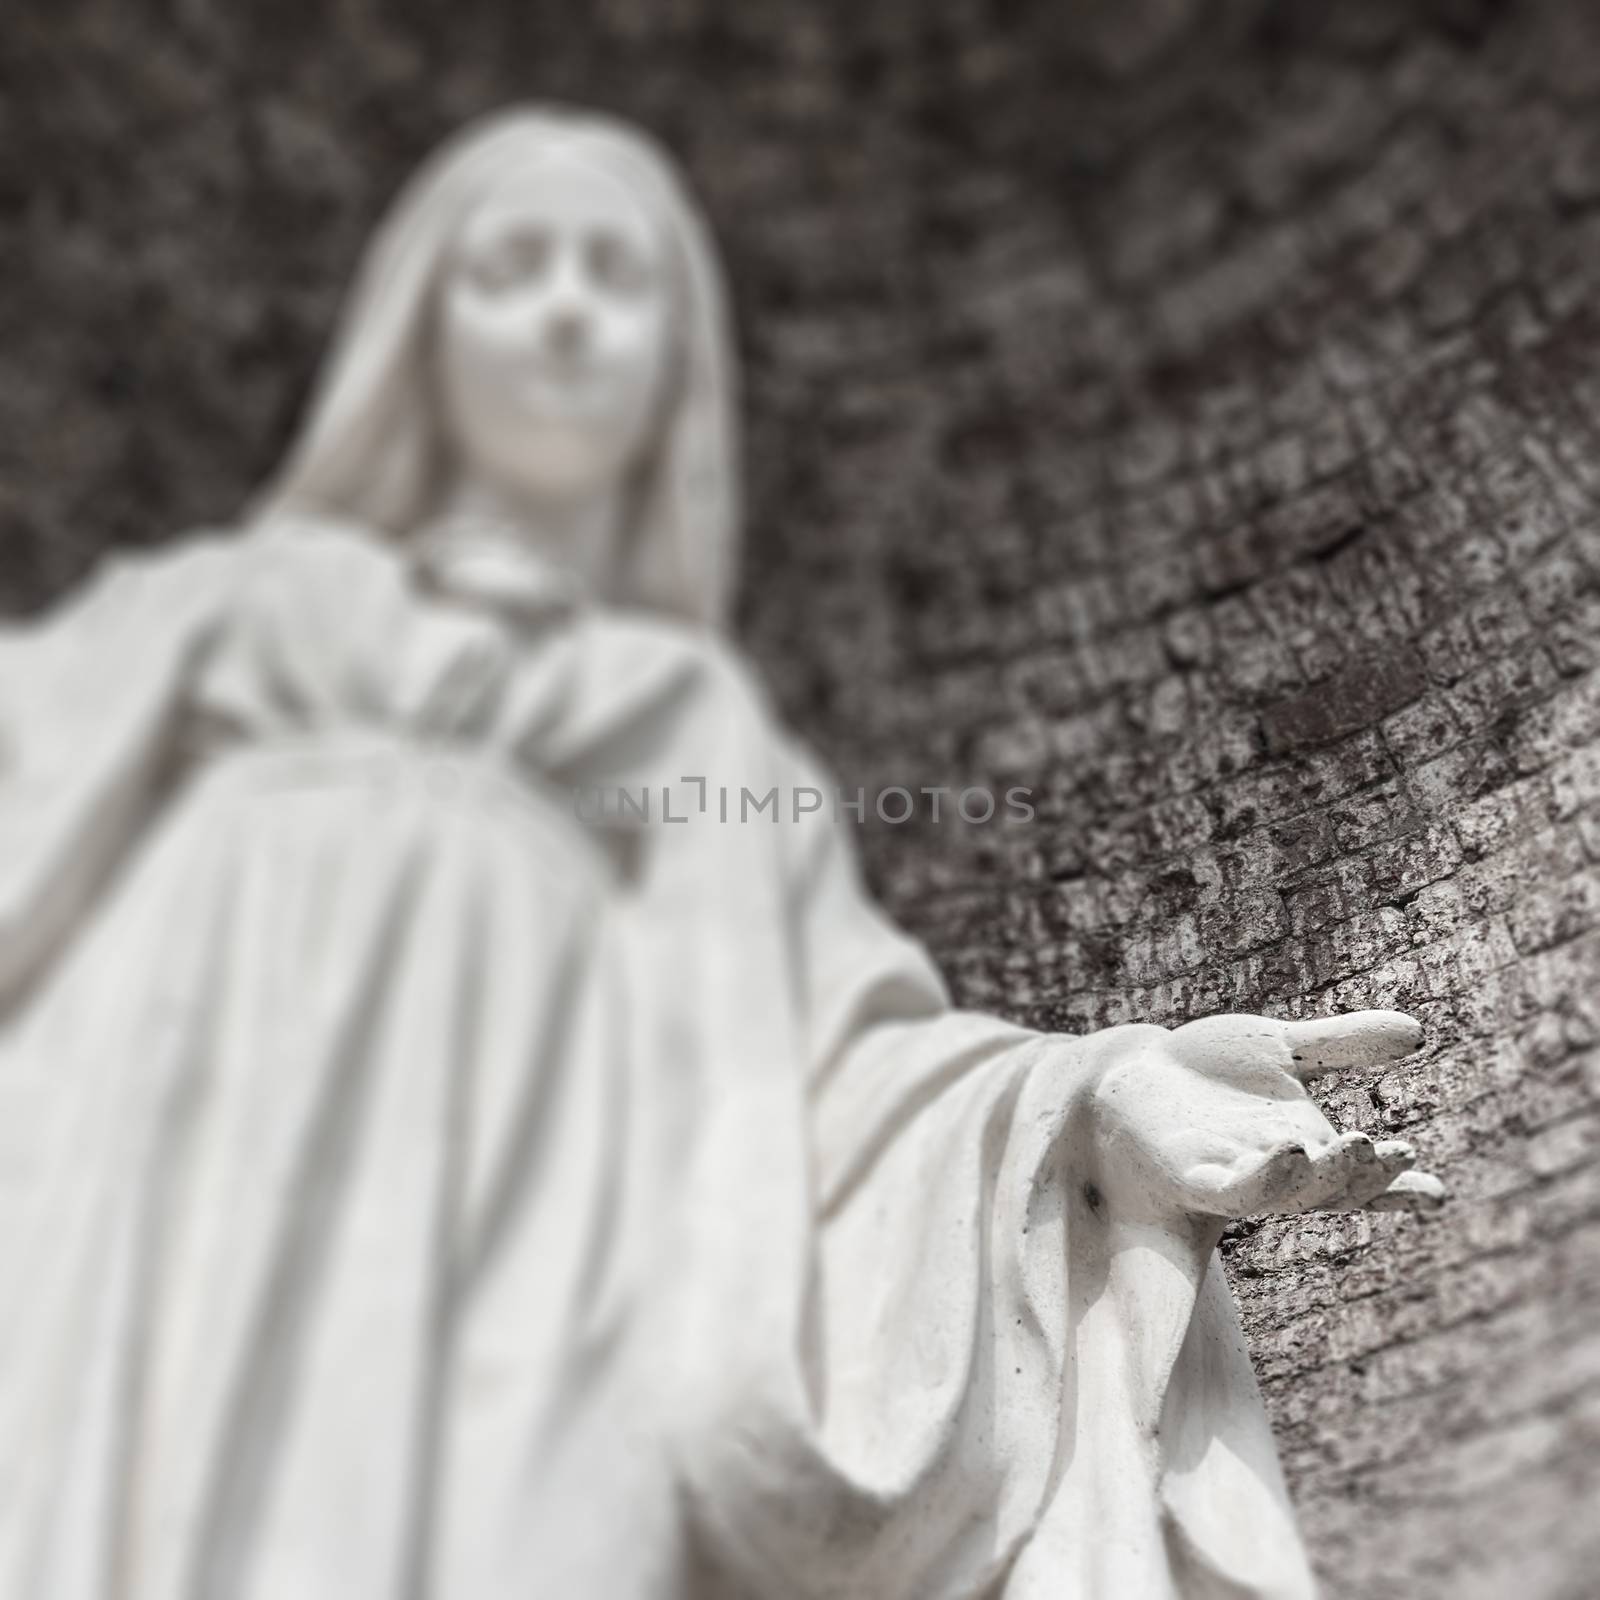 Hand of Virgin Mary statue by germanopoli